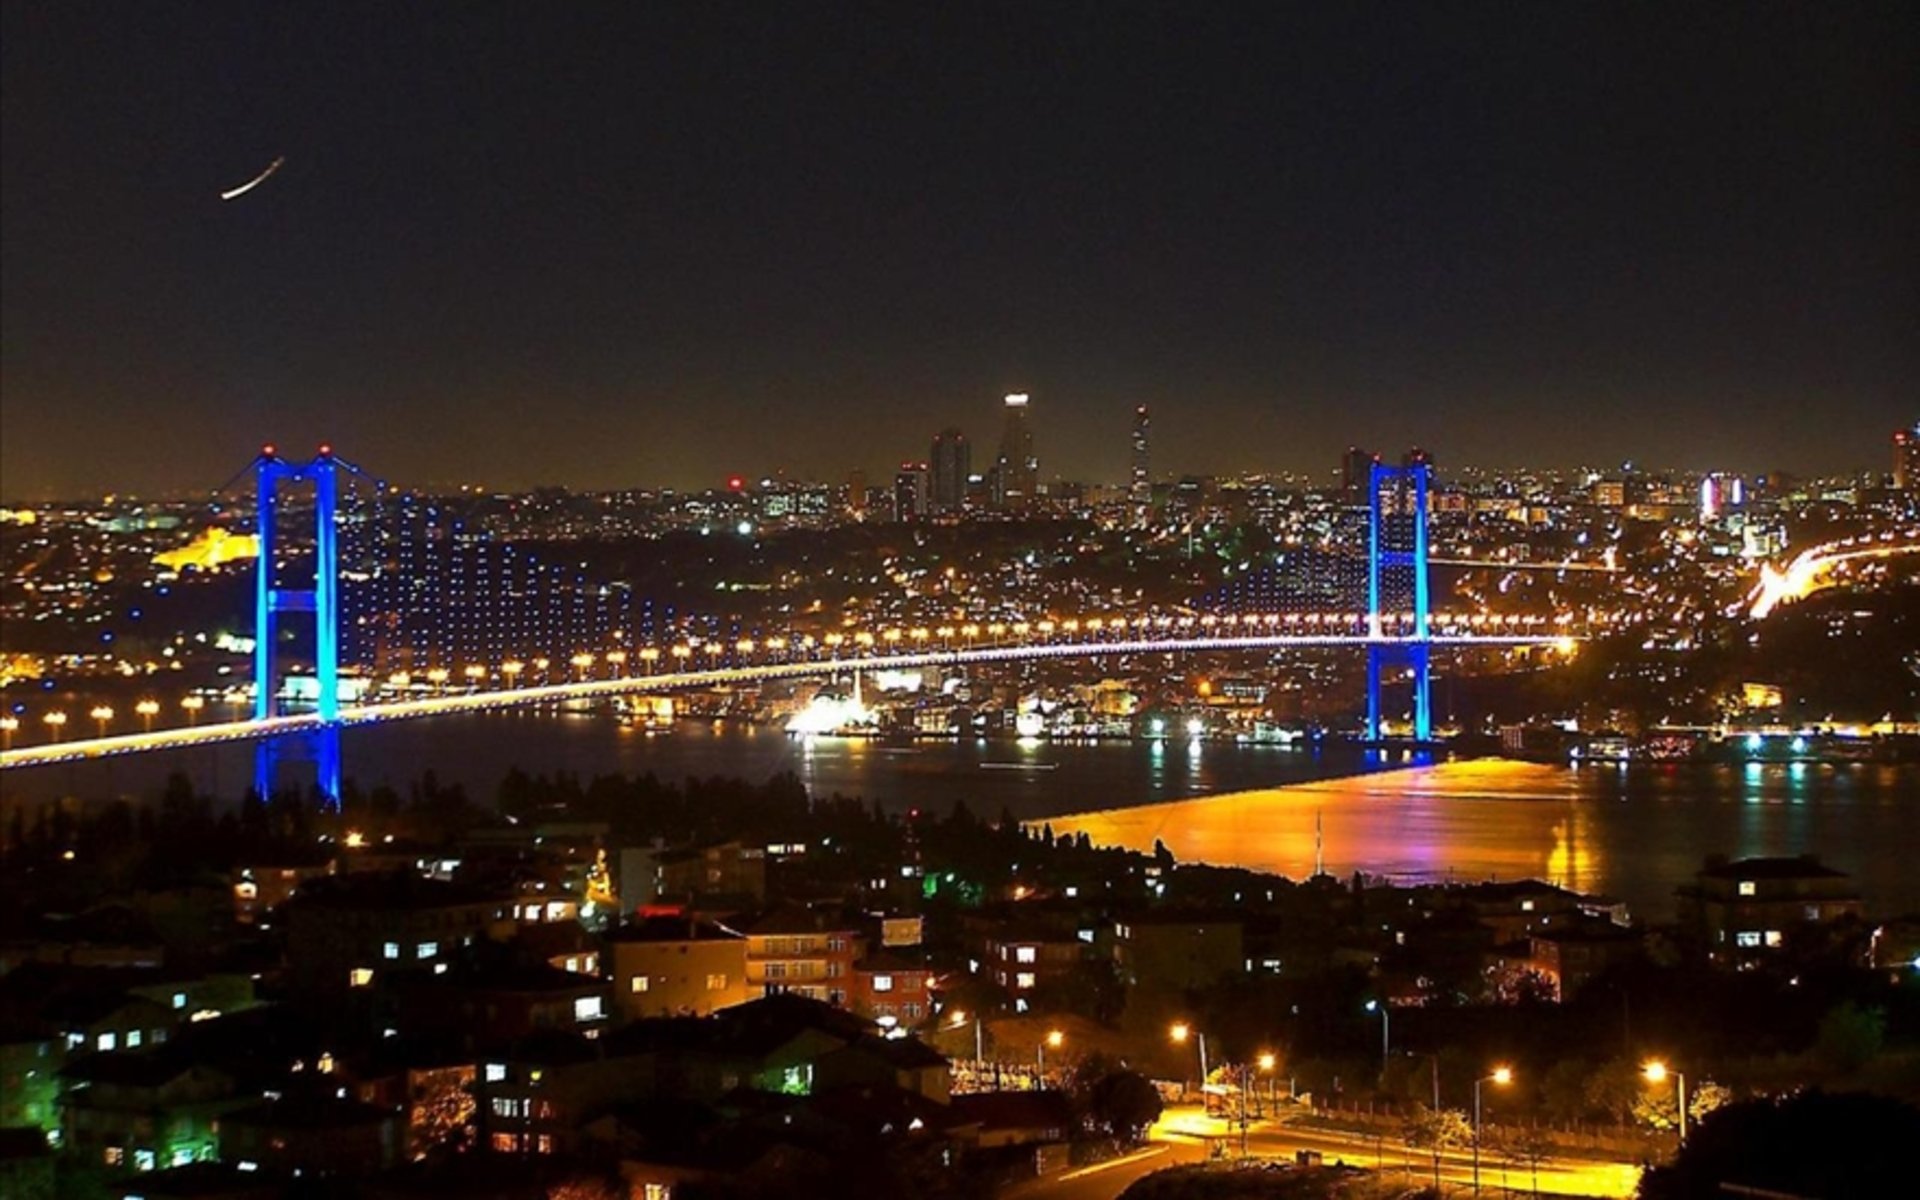  Turkey Bosphorus Bridge   HD Wallpapers Widescreen   1920x1200